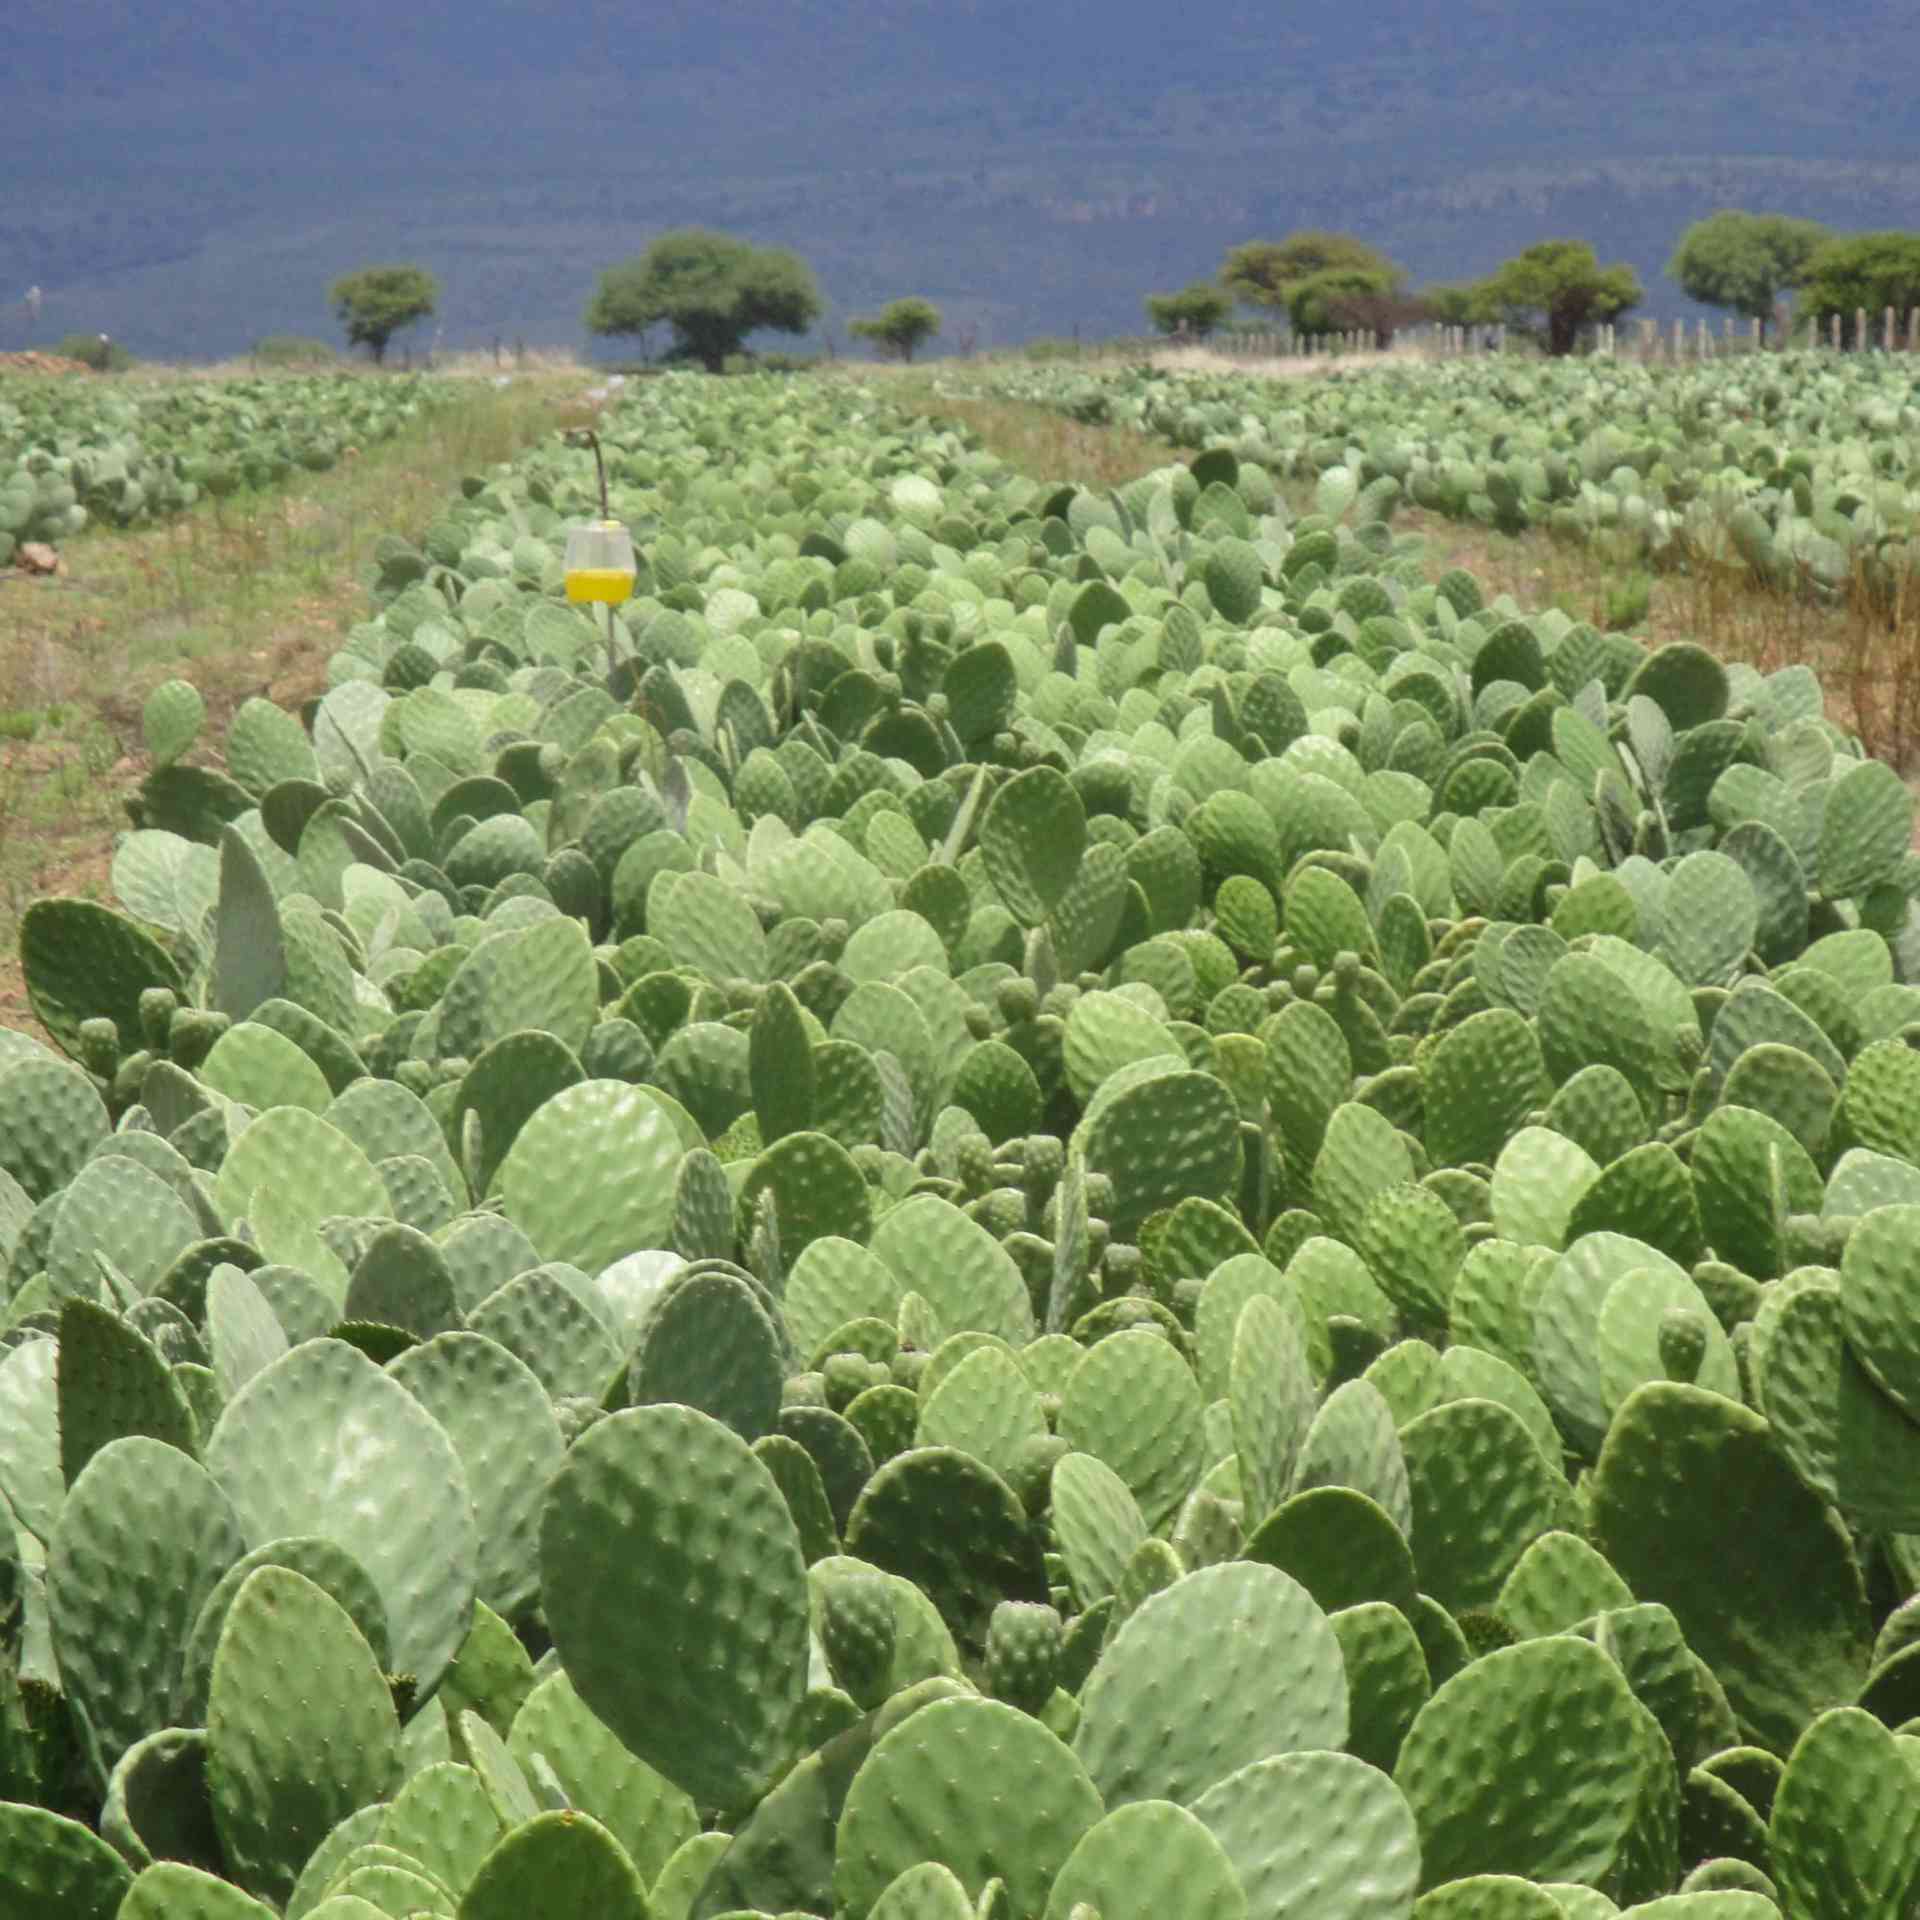 Combating Desertification - cactus-before-3